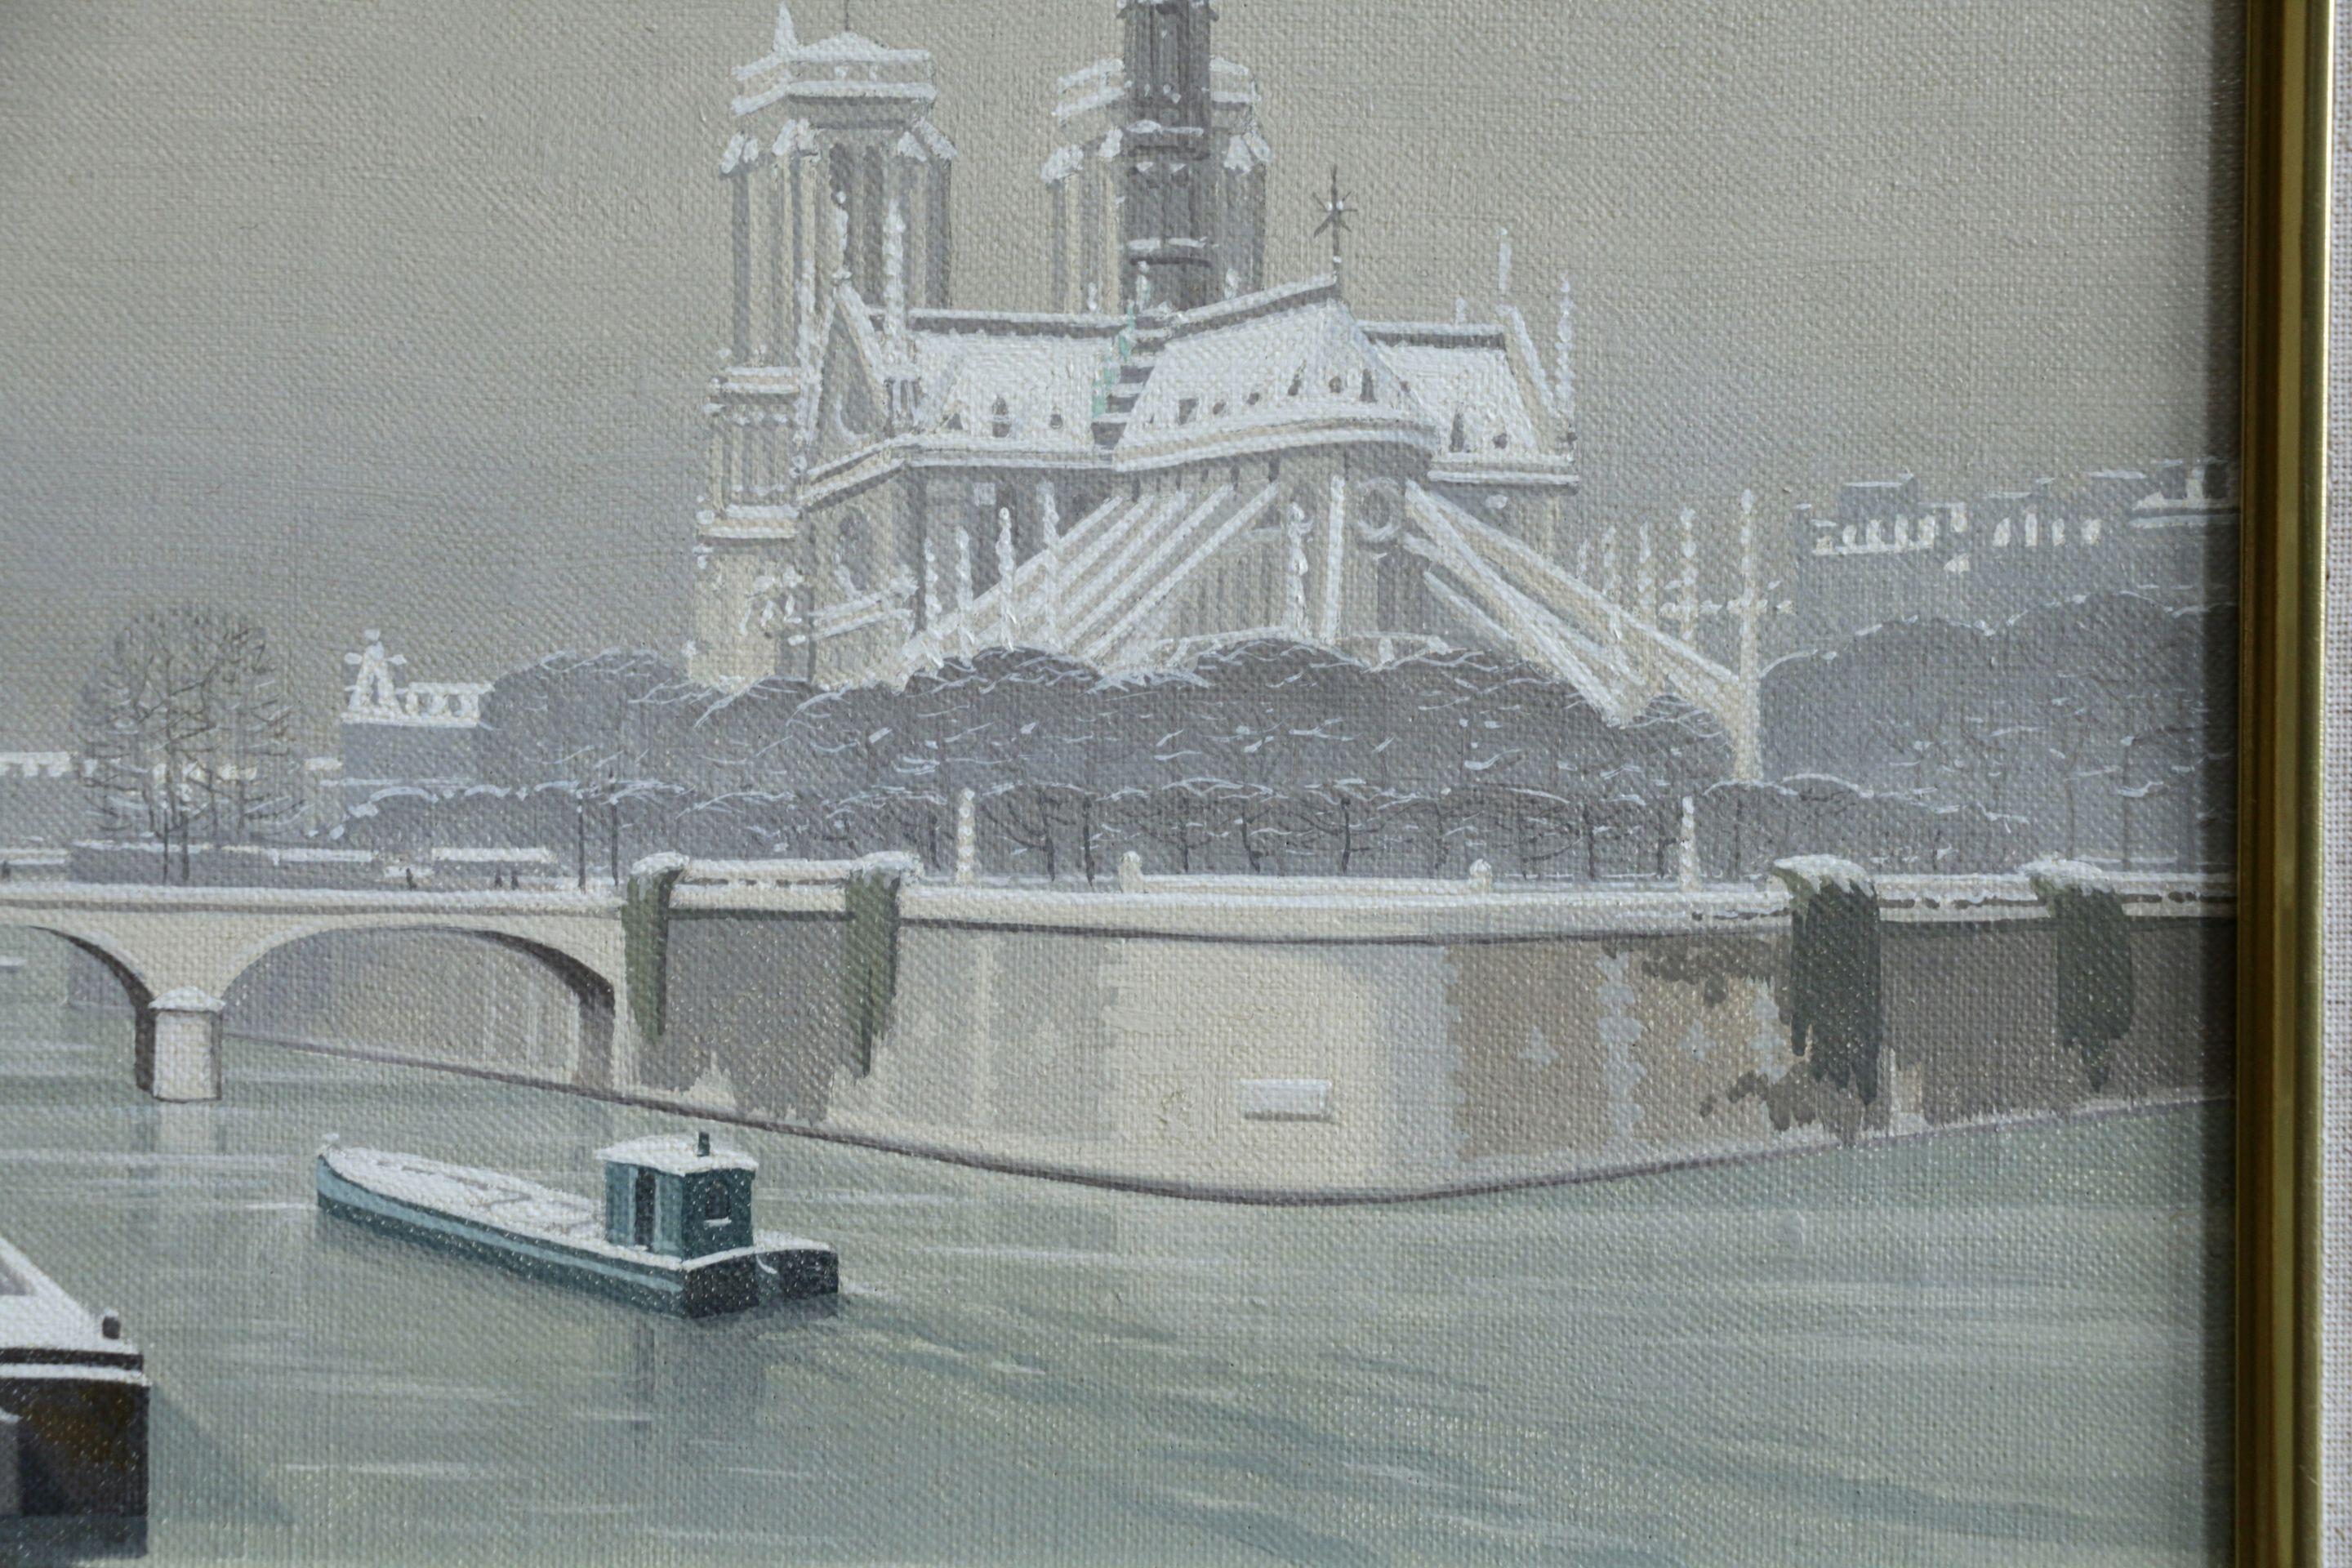 Notre Dame sous la Neige - Boats on River Winter Snow Lanscape by de Clausade - Gray Figurative Painting by Pierre de Clausade